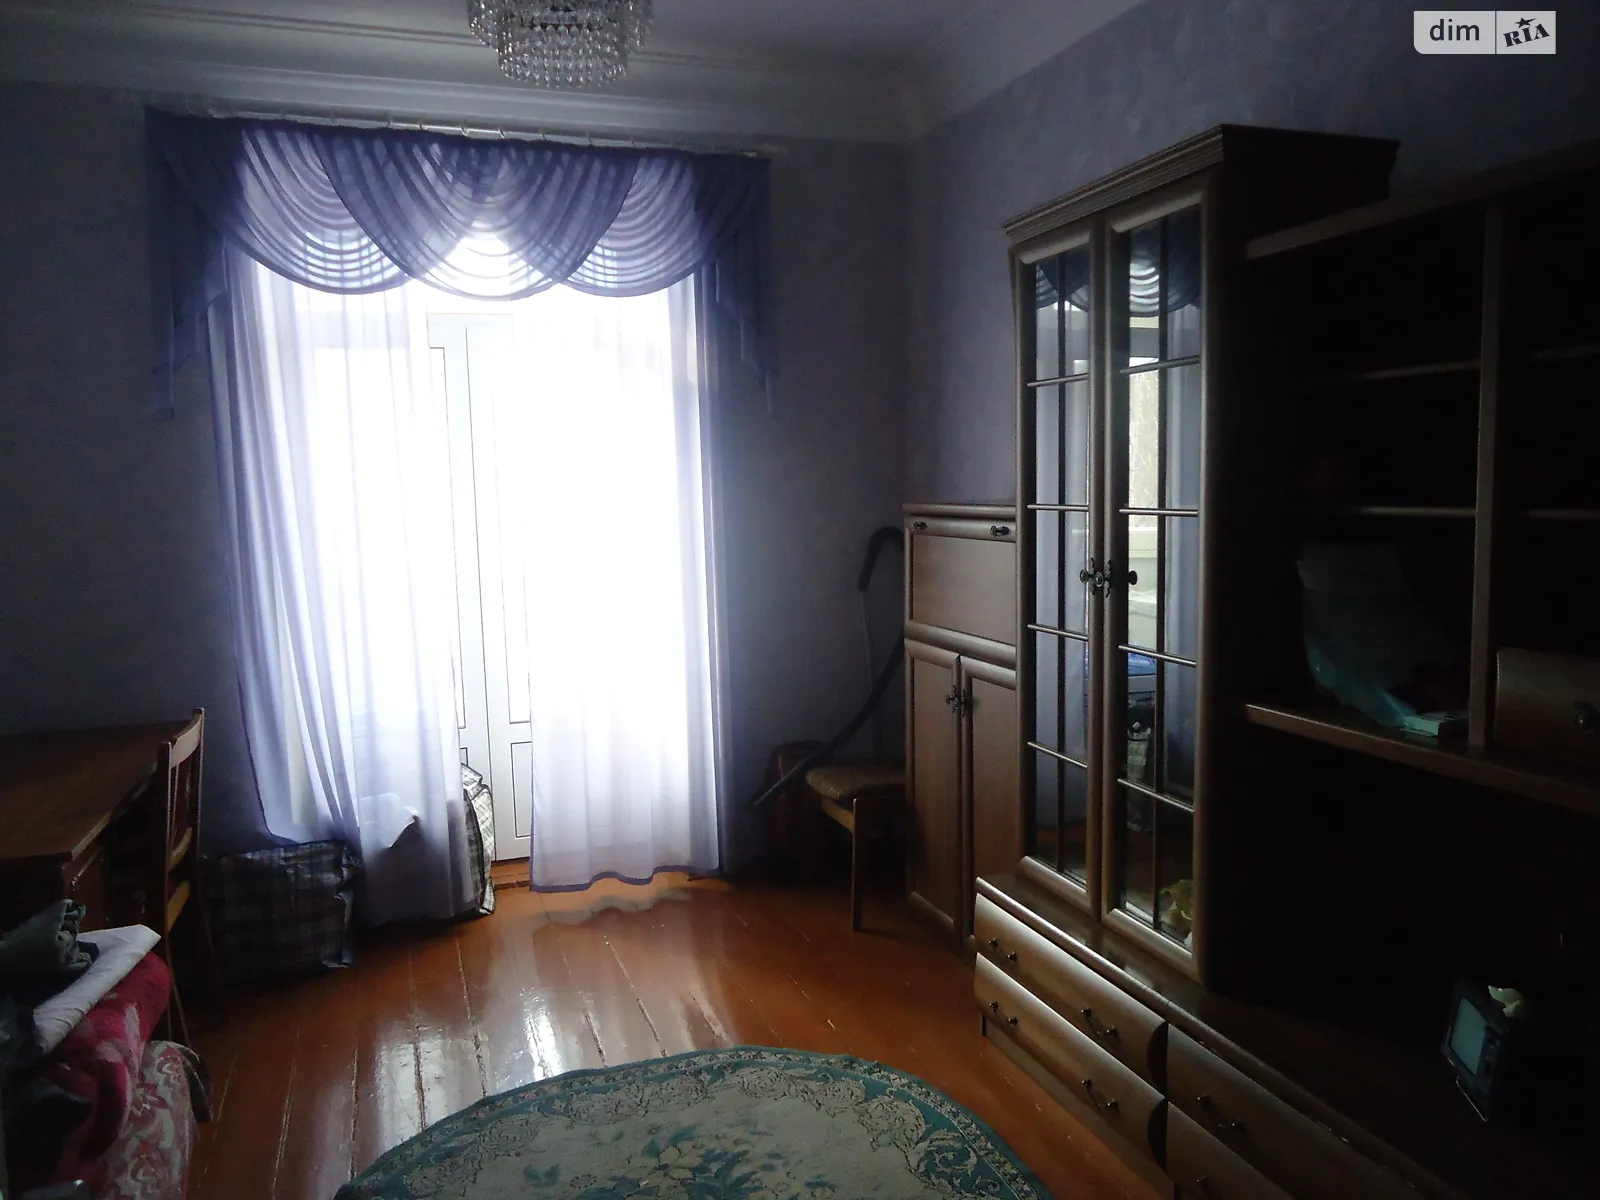 Сдается в аренду 3-комнатная квартира 60 кв. м в Белой Церкви, ул. Ярослава Мудрого, 44 - фото 1